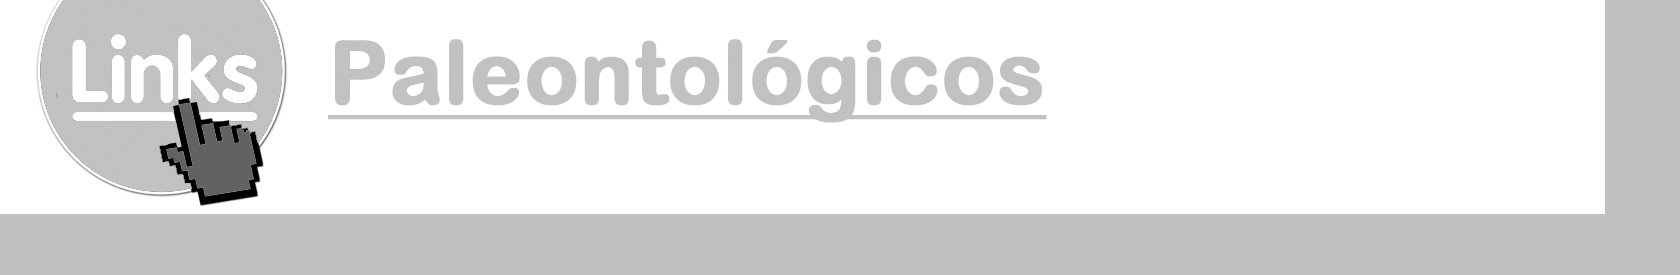 Links Paleontología General